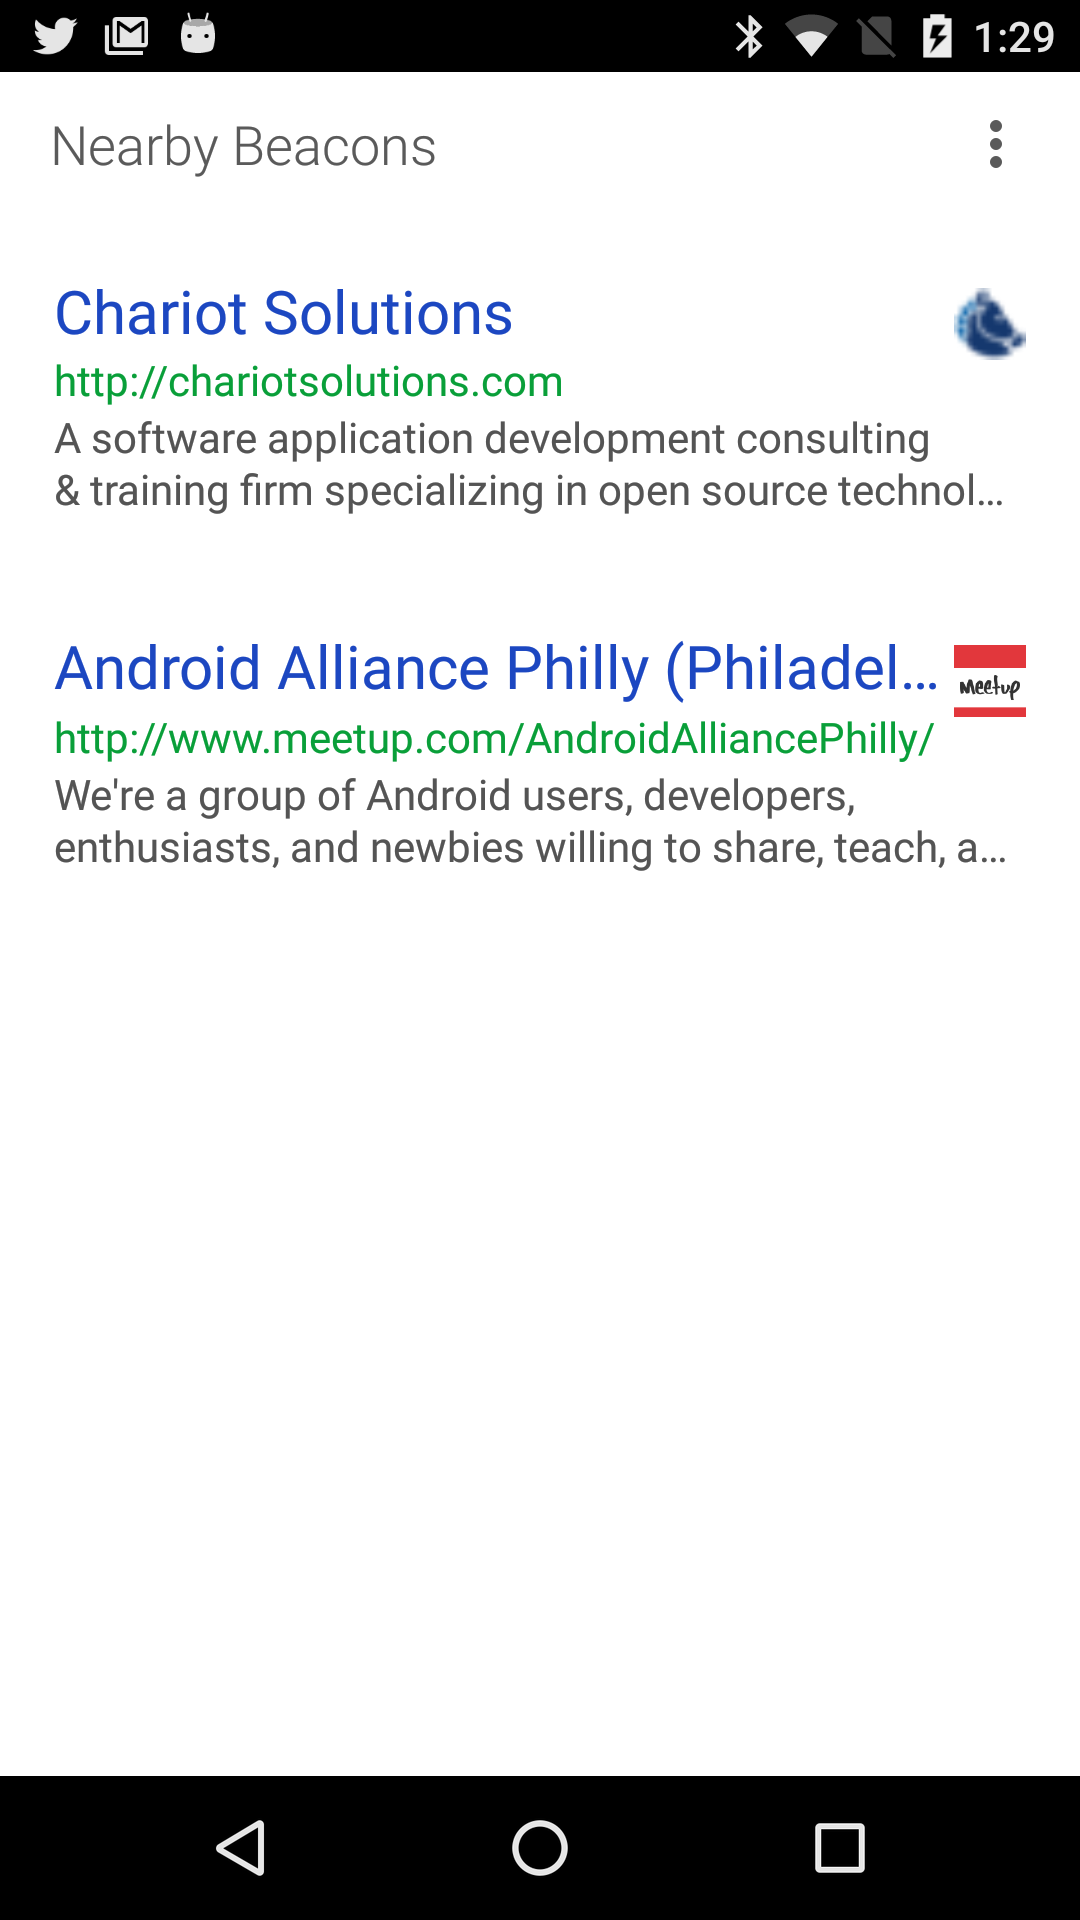 Android Alliance Philadelphia